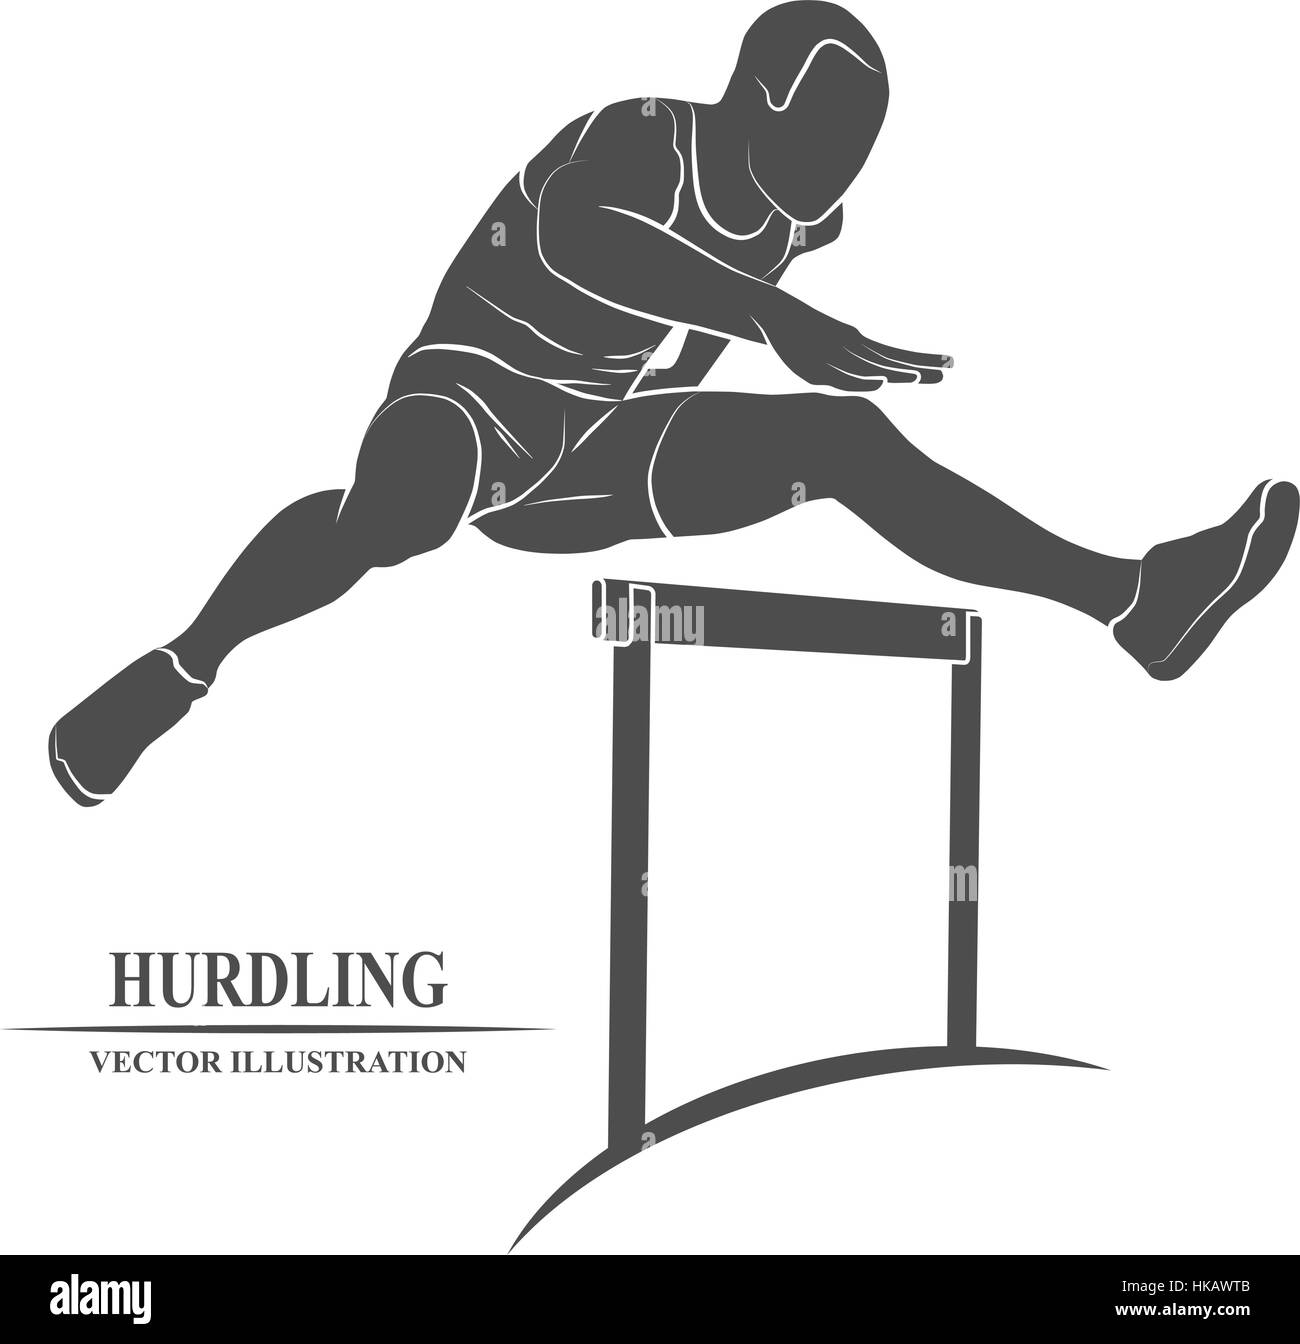 Man jumping over hurdles icon. Vector illustration. Stock Vector